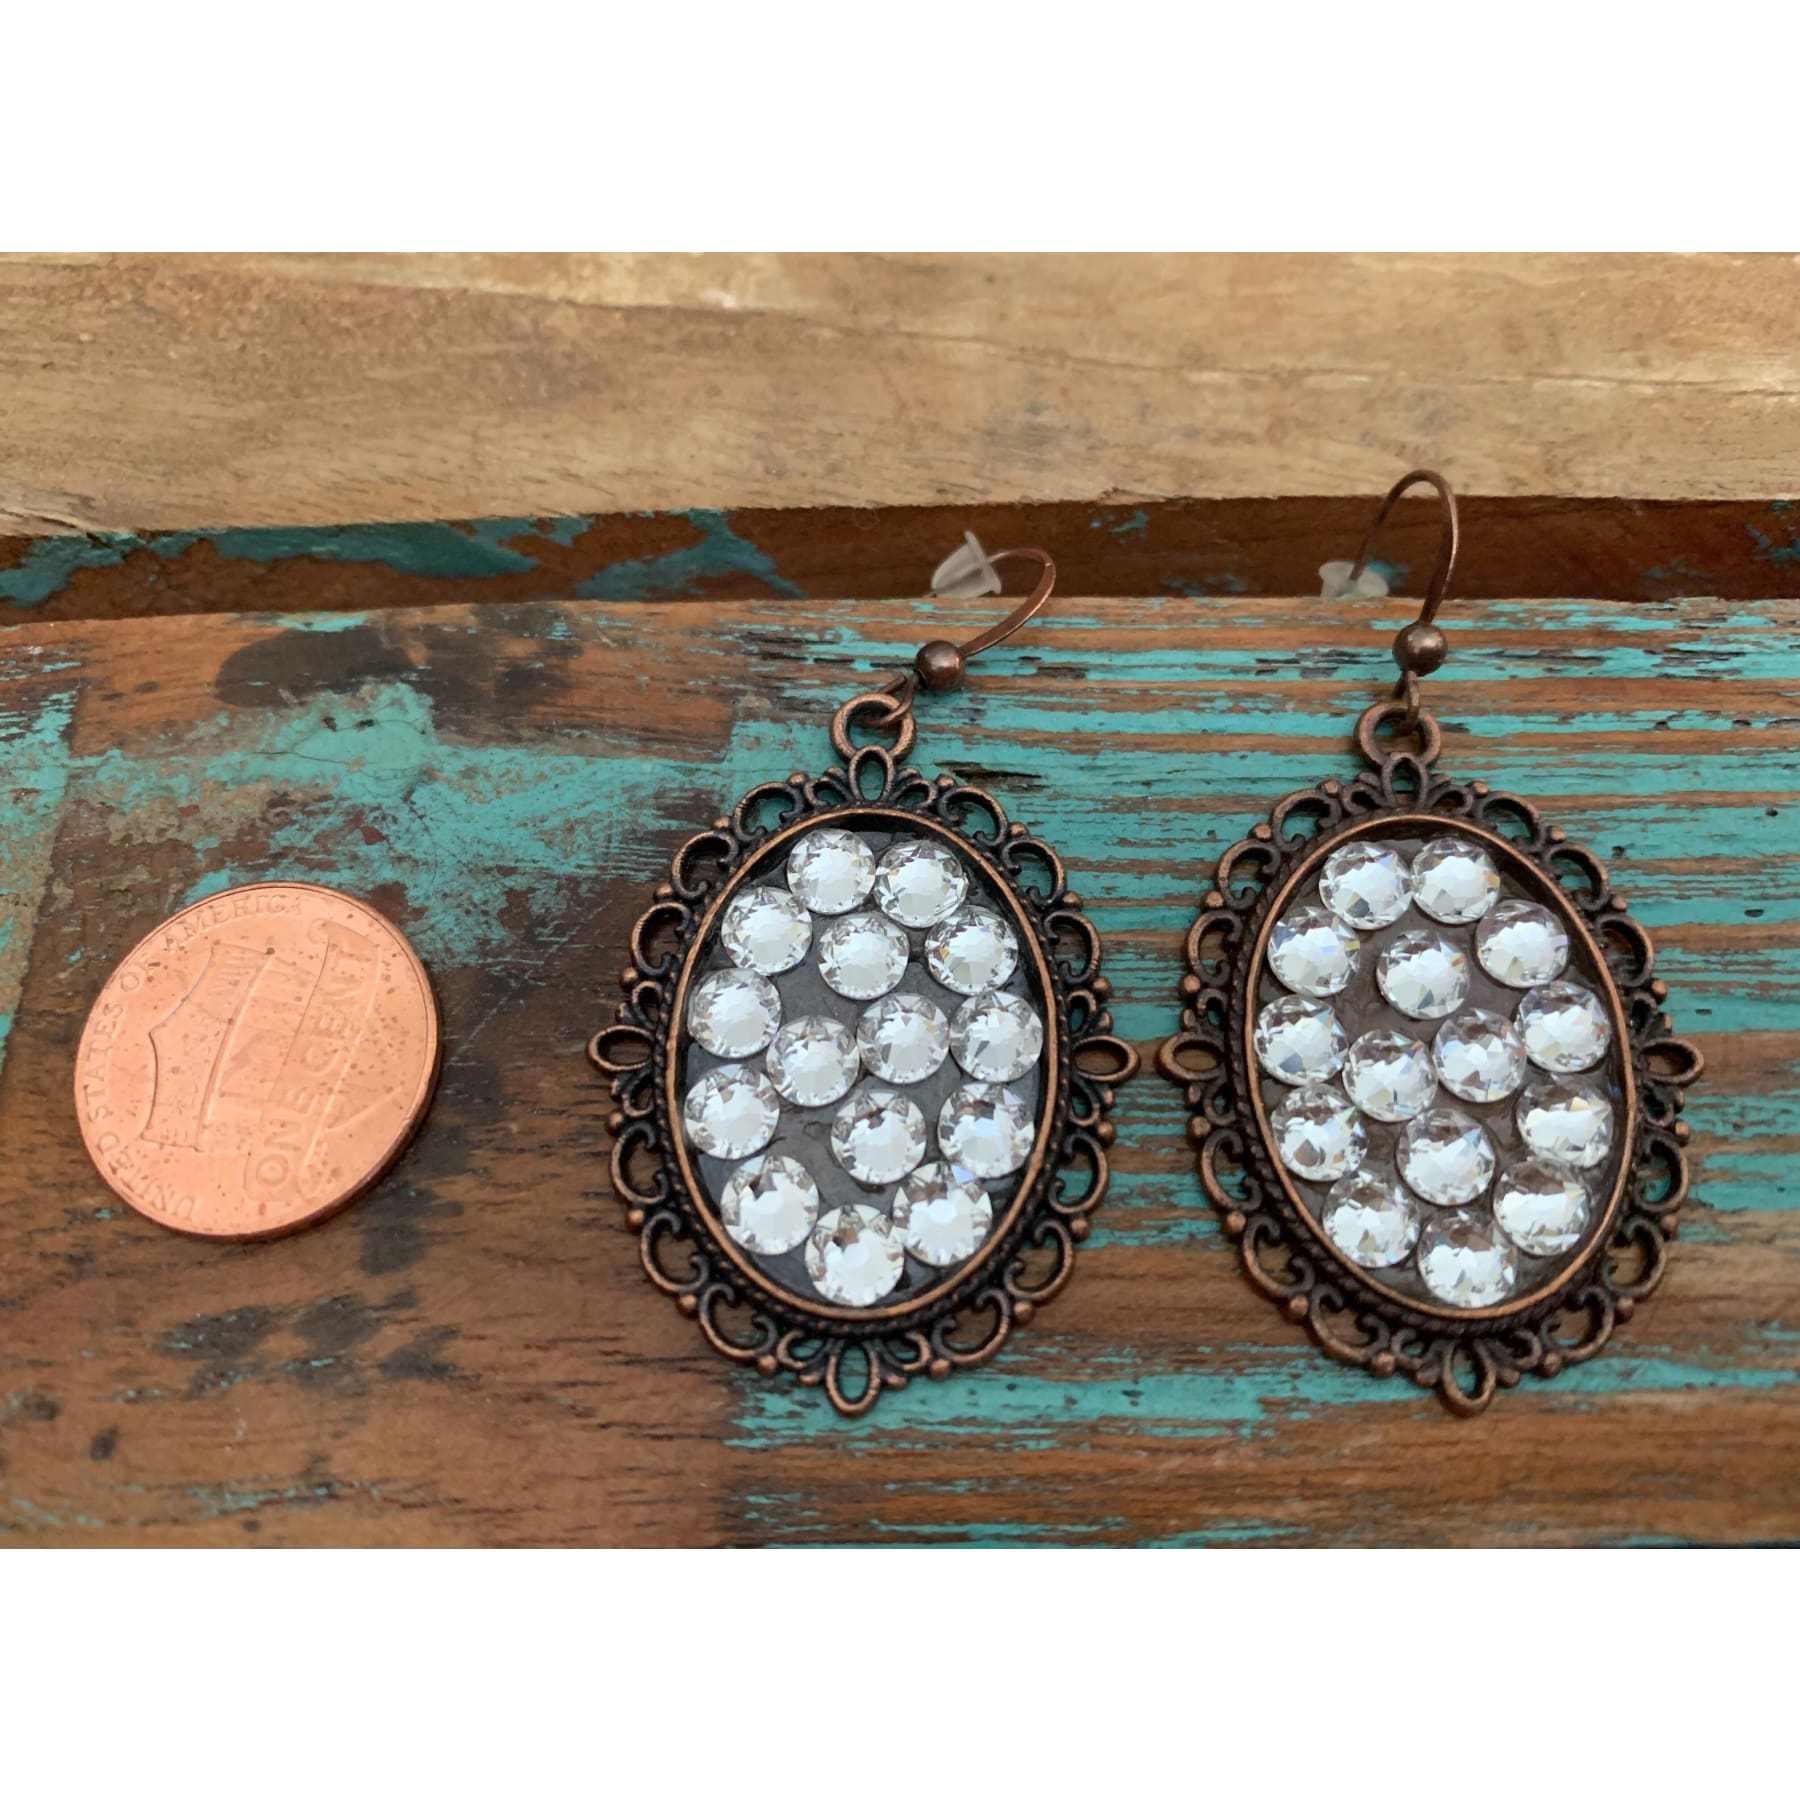 Clear Crystal Swarovski Oval Earrings in Antiqued Copper,Earrings - Dirt Road Divas Boutique